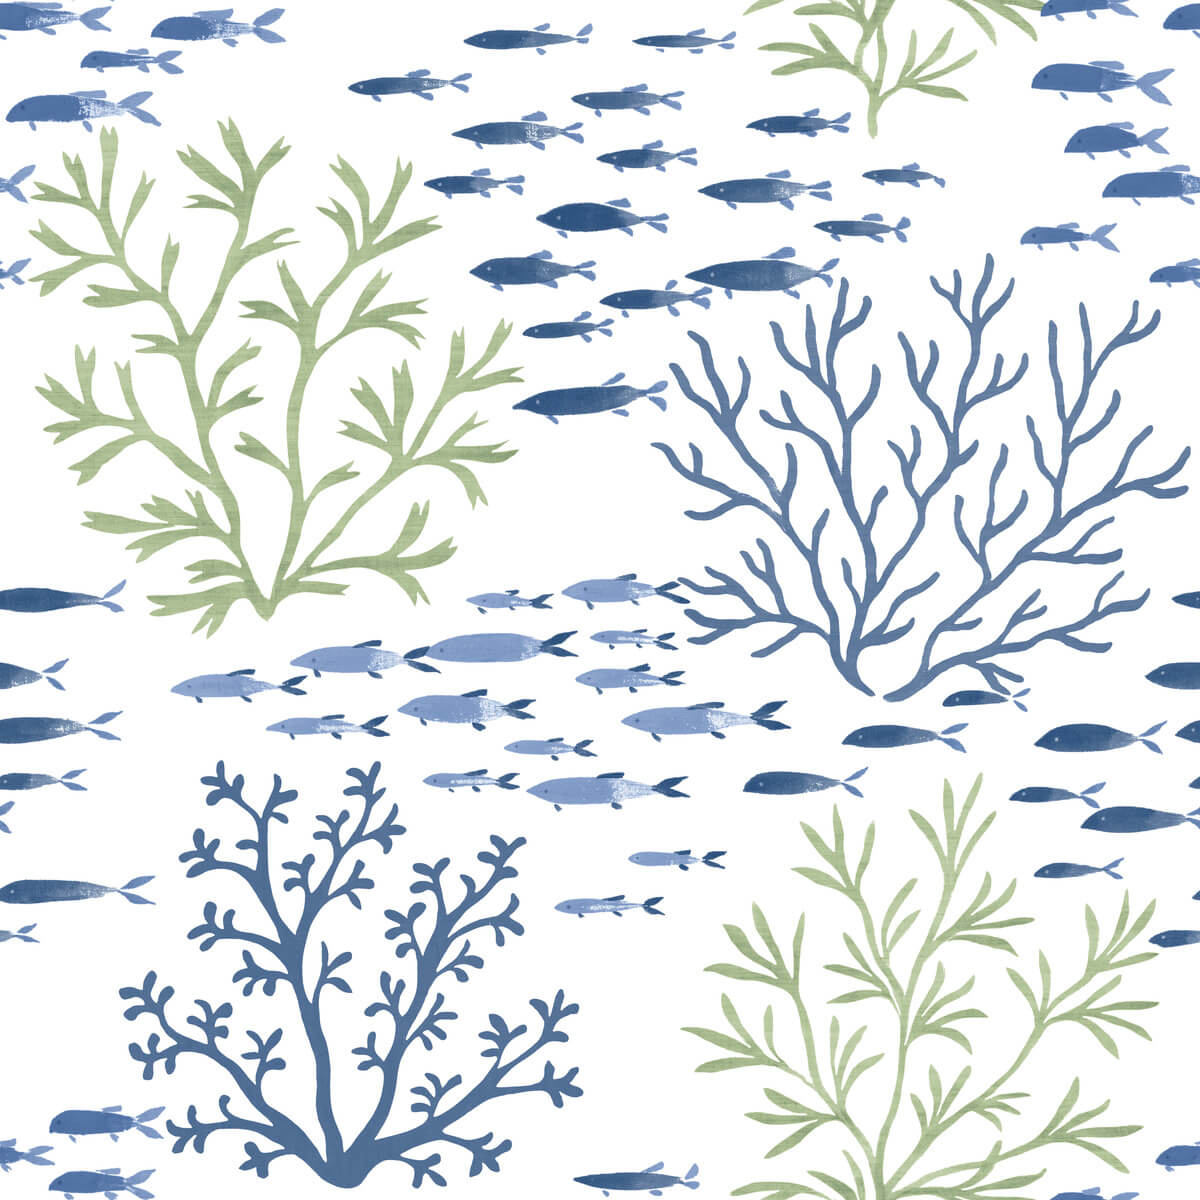 Waters Edge Resource Library Marine Garden Wallpaper - Green & Blue